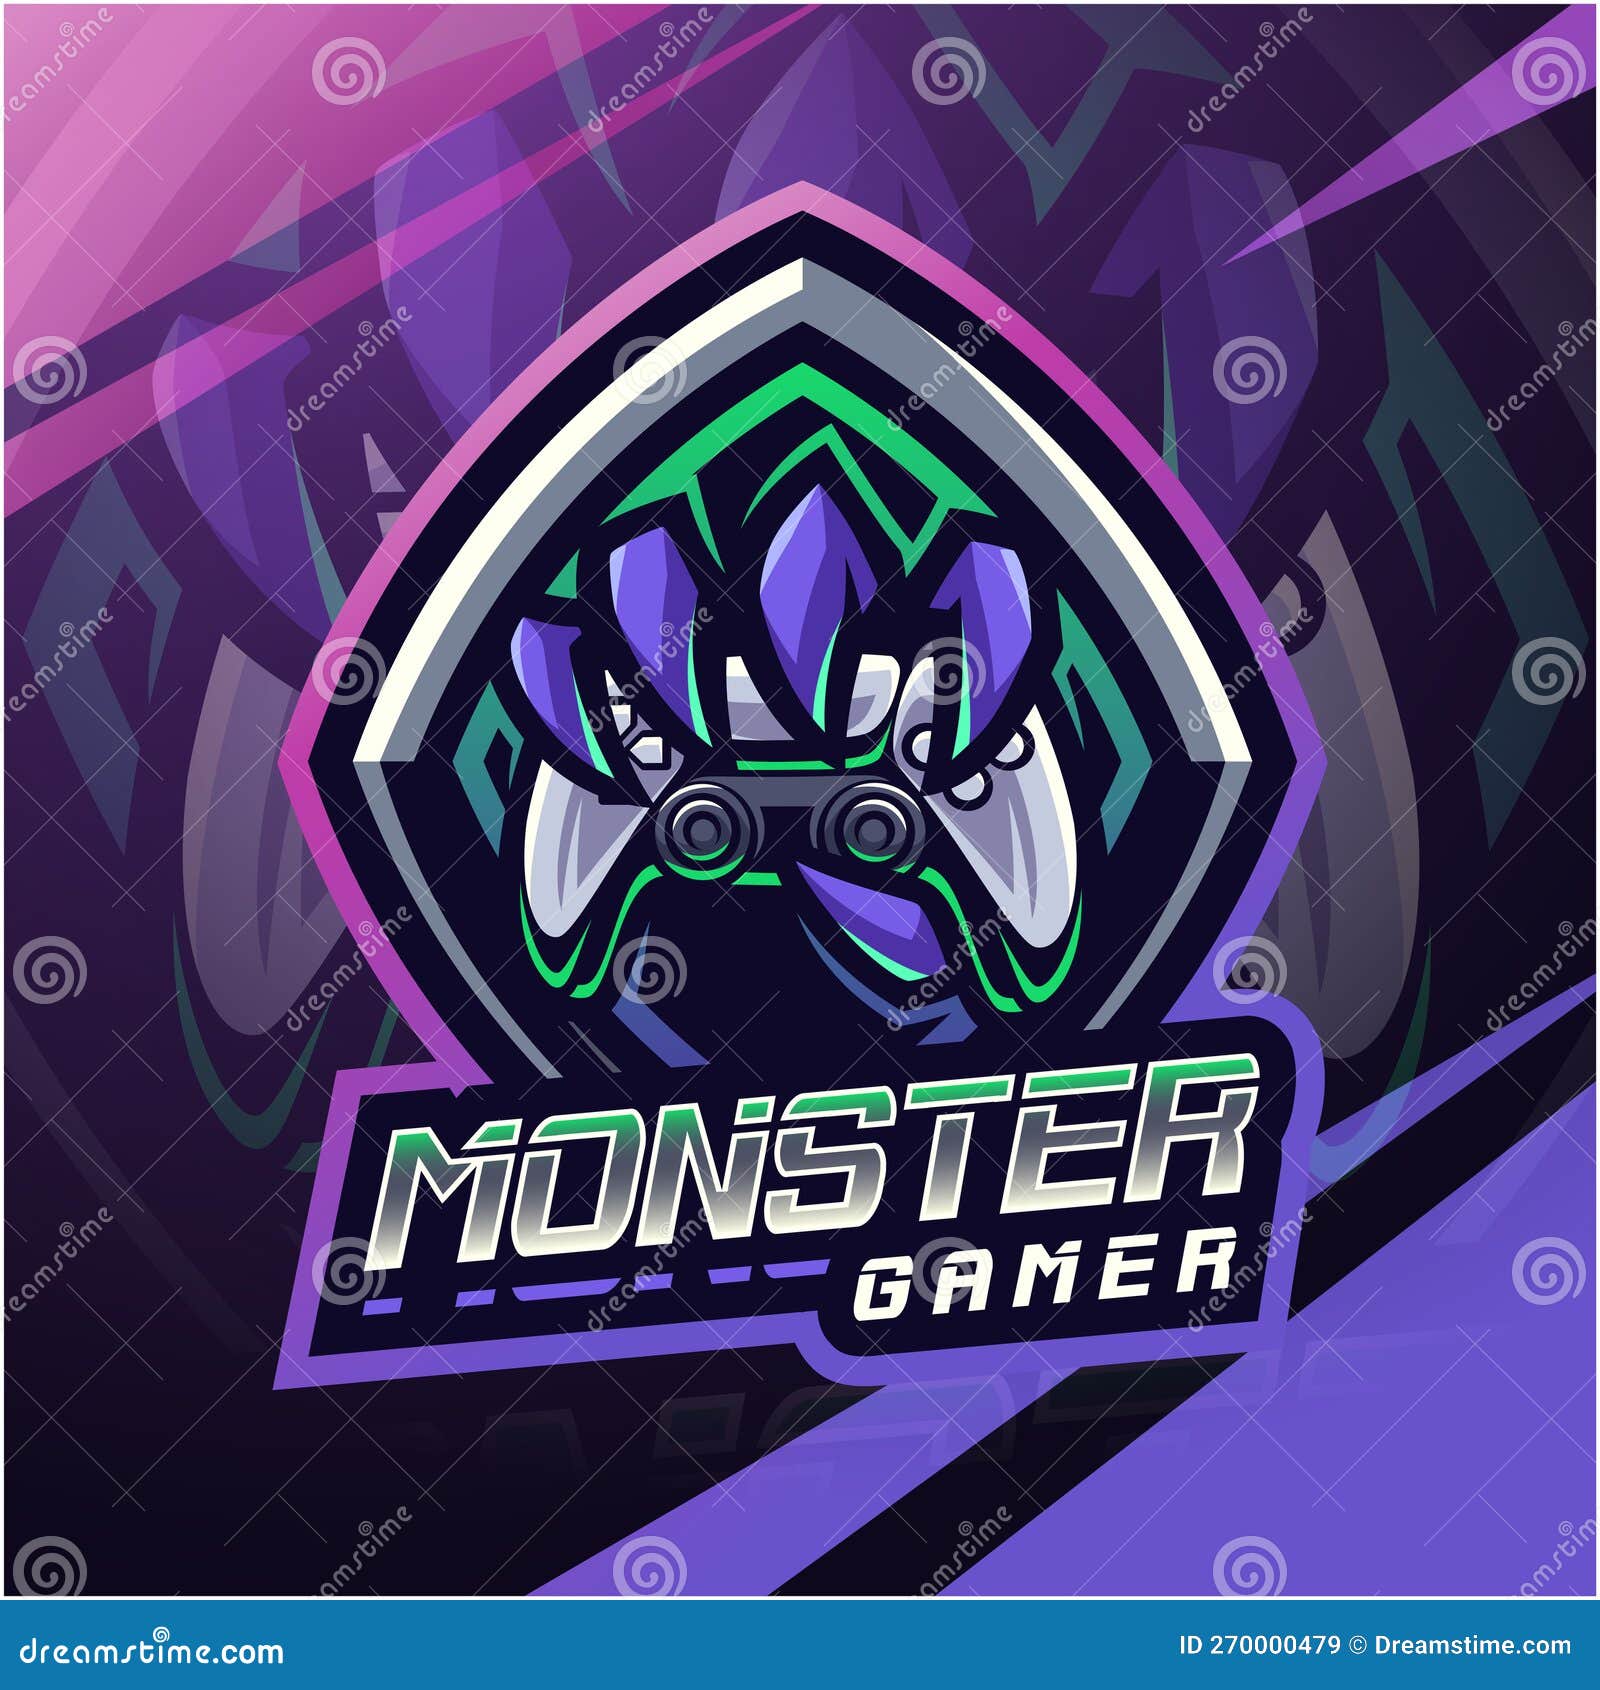 62 Cool Monster Logo Ideas